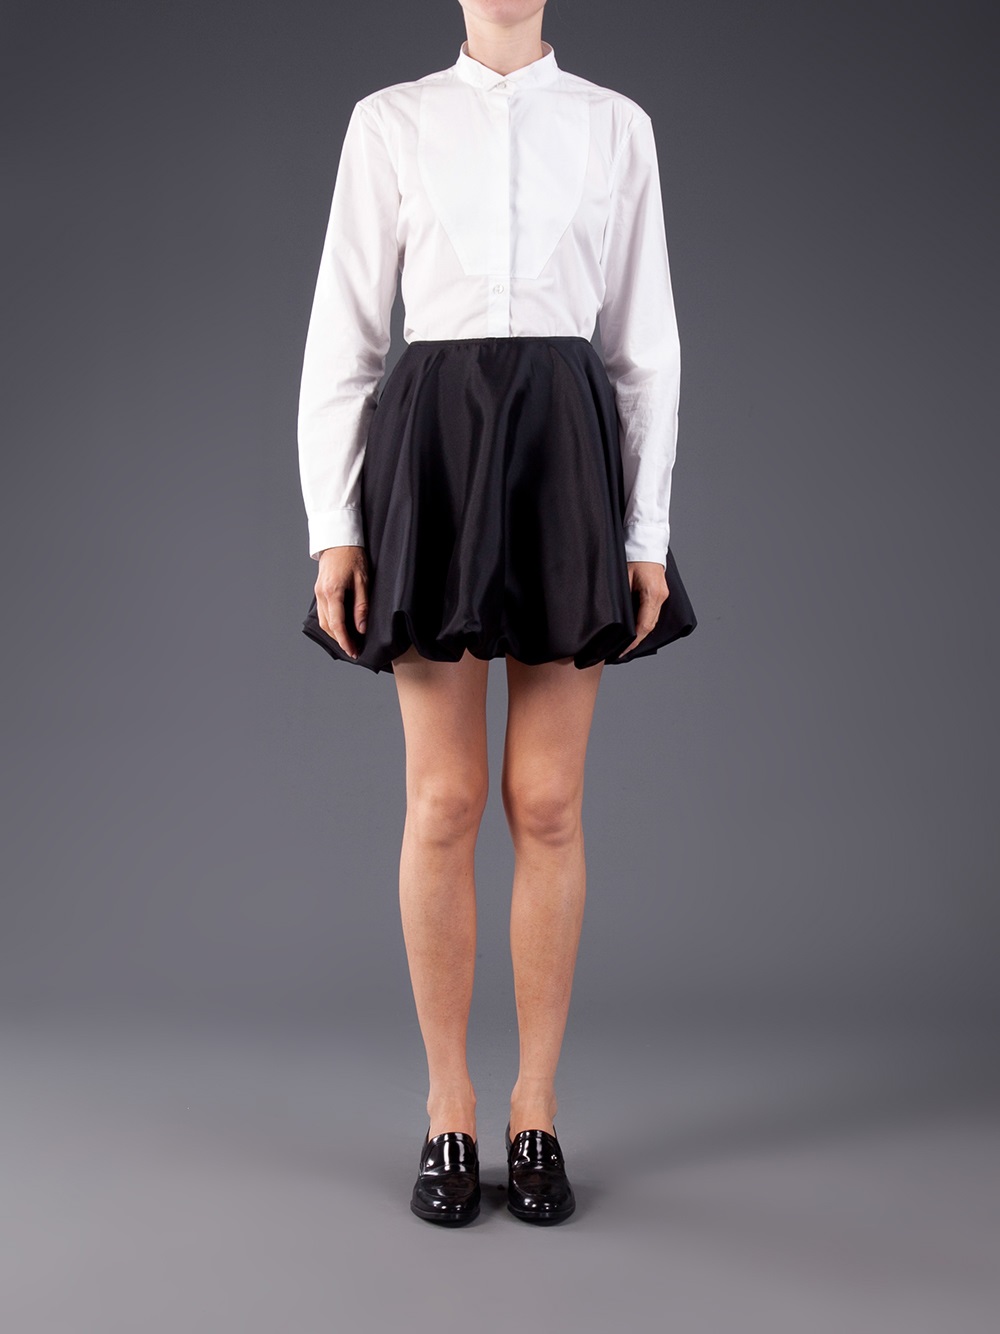 Technically, not a dress: Simon endorses this Harvey Faircloth <a href="http://www.shoptrafficla.com/shopping/women/harvey-faircloth-bubble-hem-skirt-item-10481335.aspx">bubble skirt</a> too. Image via TRAFFIC LA.